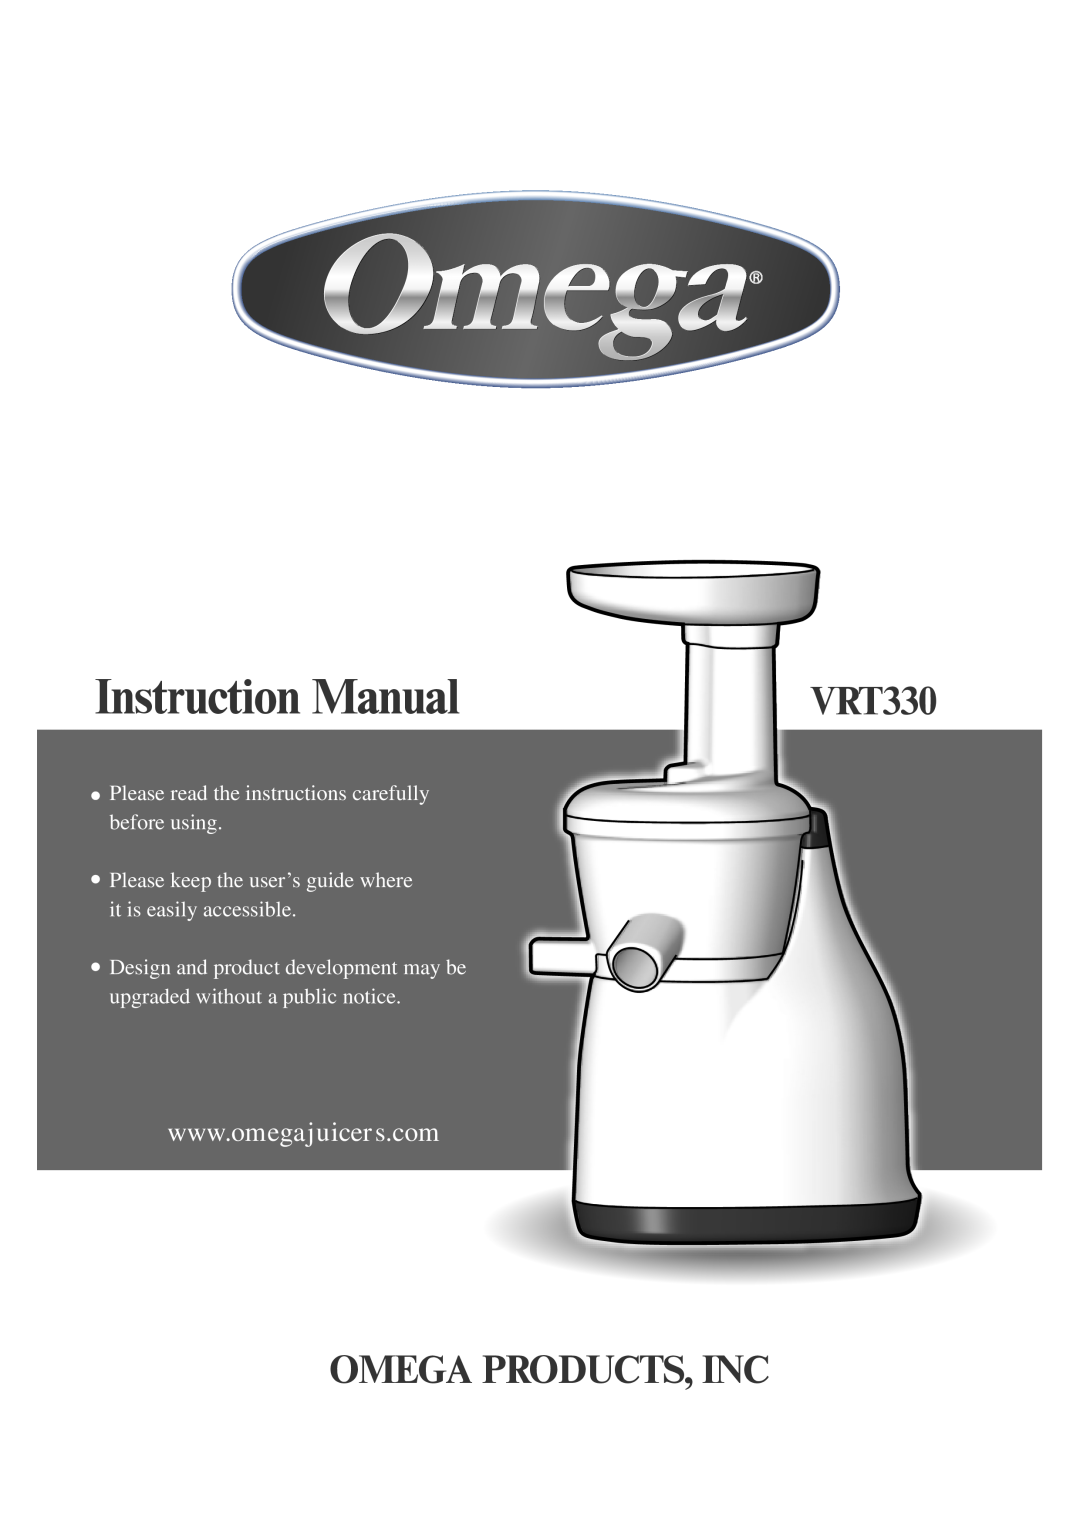 Omega VRT380HDC Instruction Manual, Omega Products, Inc, VRT330, Please read the instructions carefully before using 